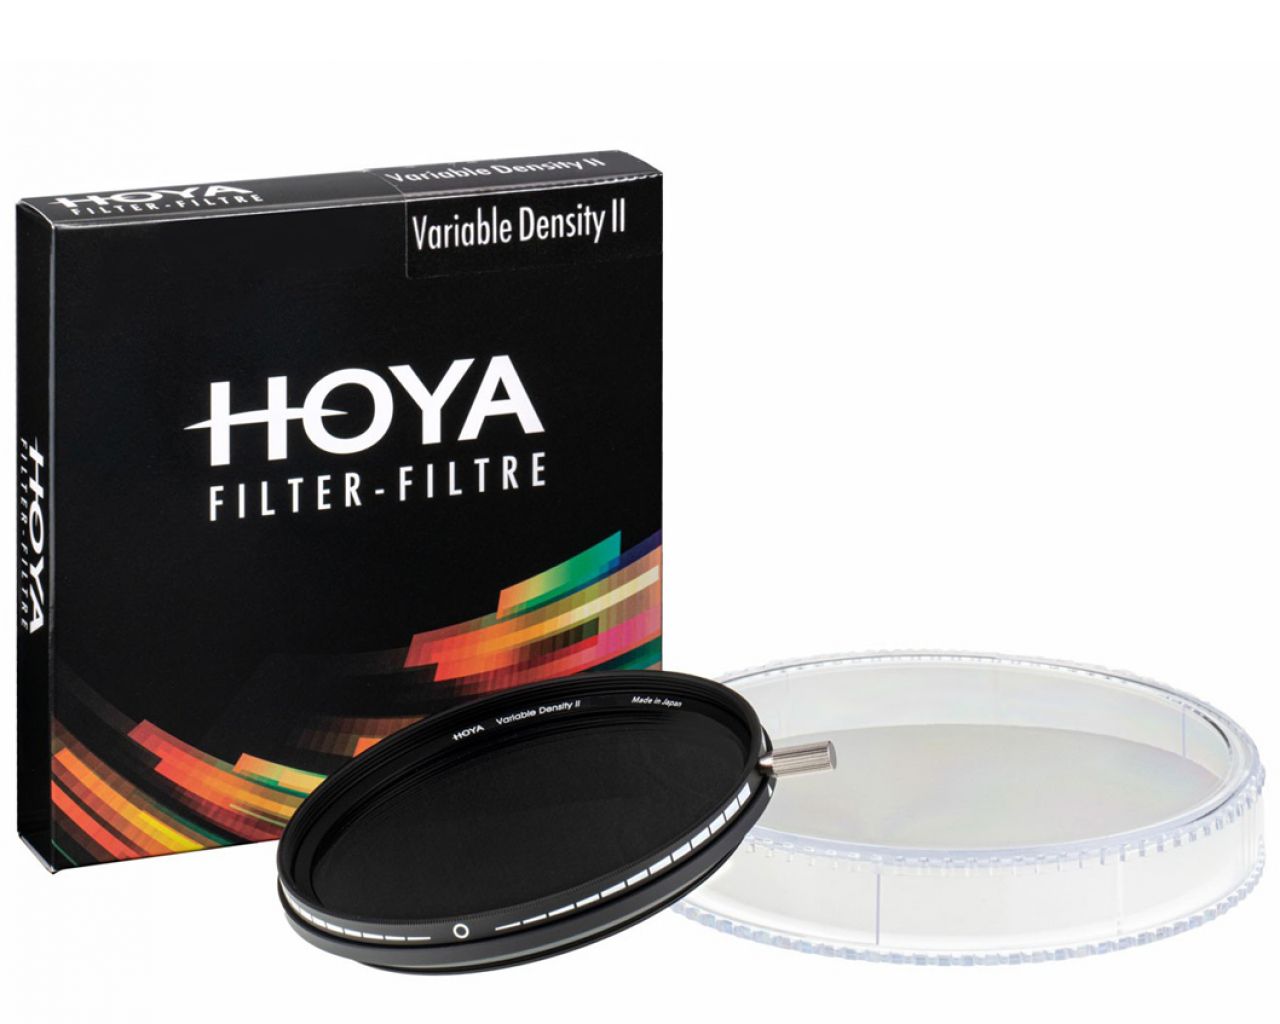 Hoya Filtro Vario-ND II per Obiettivi 77mm